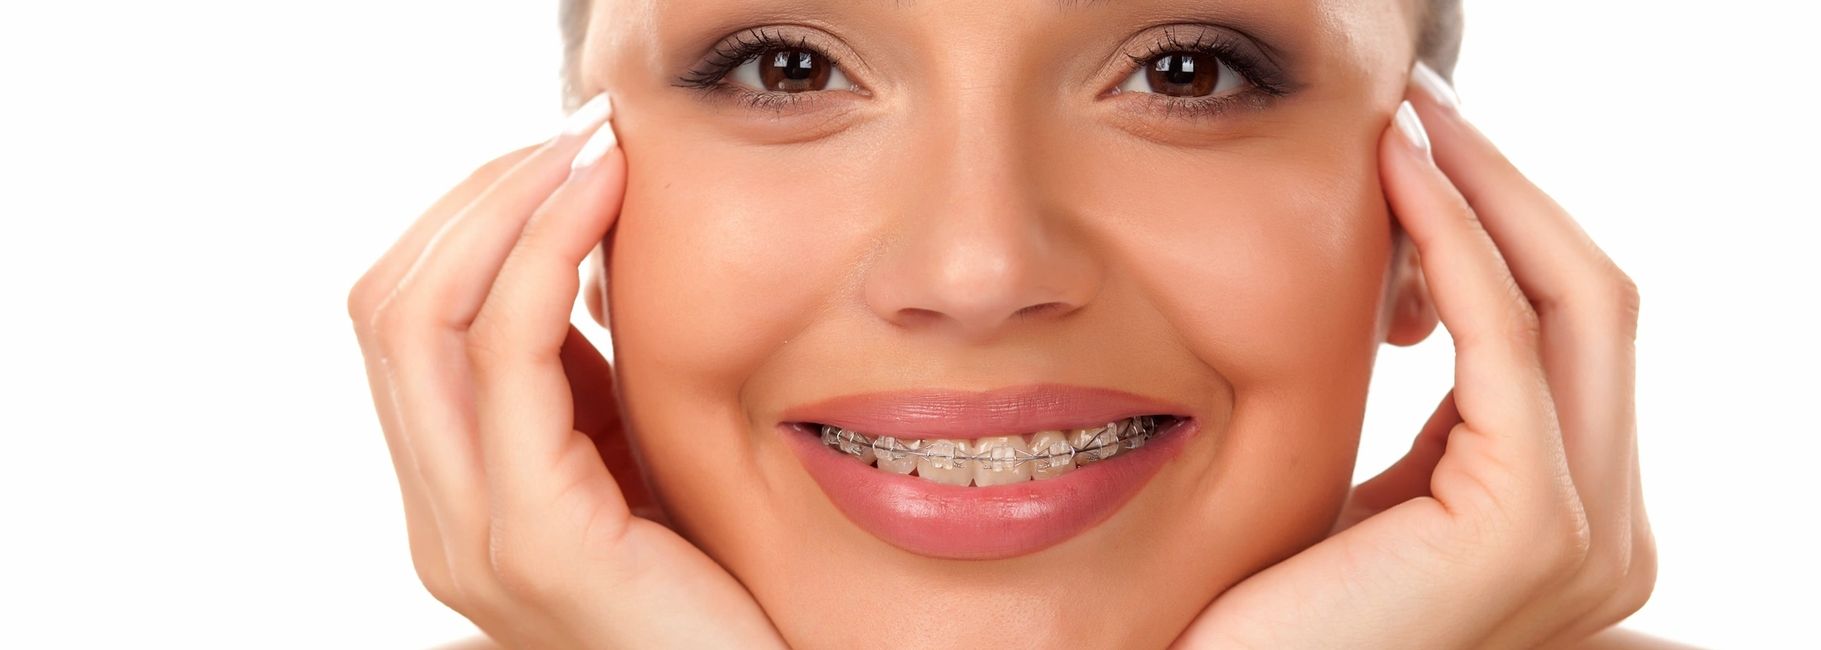 Ceramic braces helping to create a beautiful smile!